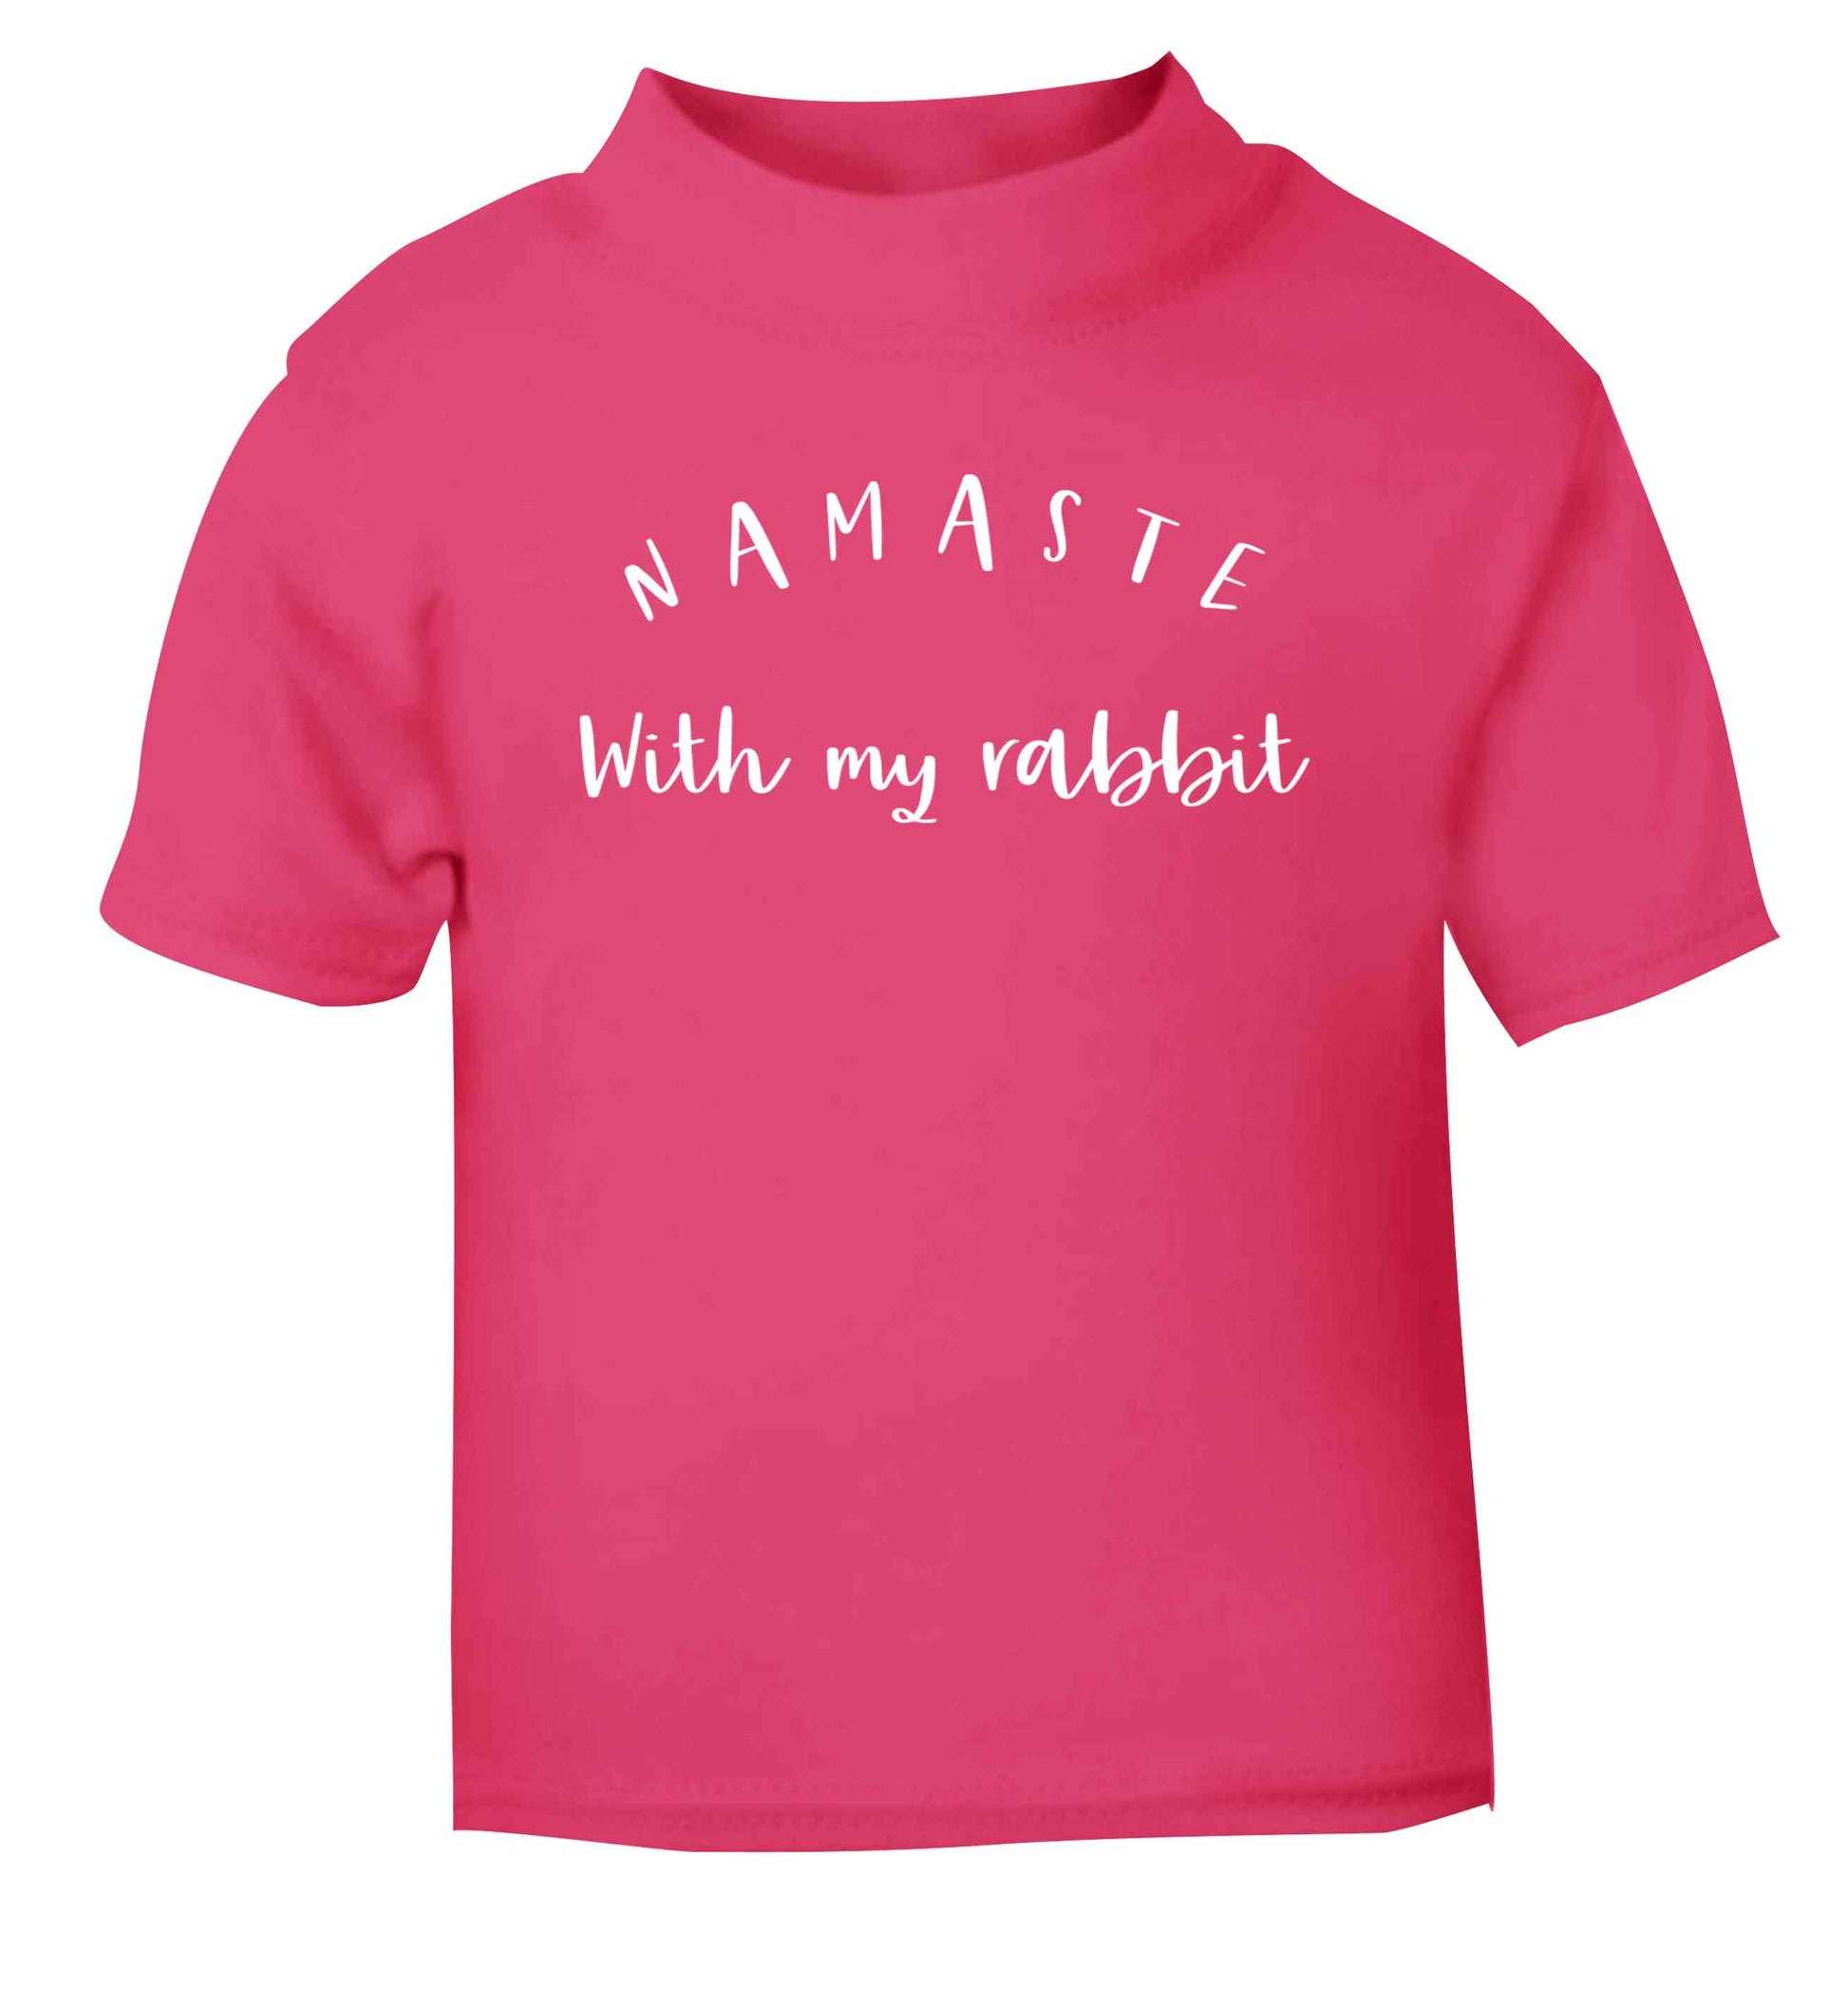 Namaste with my rabbit pink Baby Toddler Tshirt 2 Years